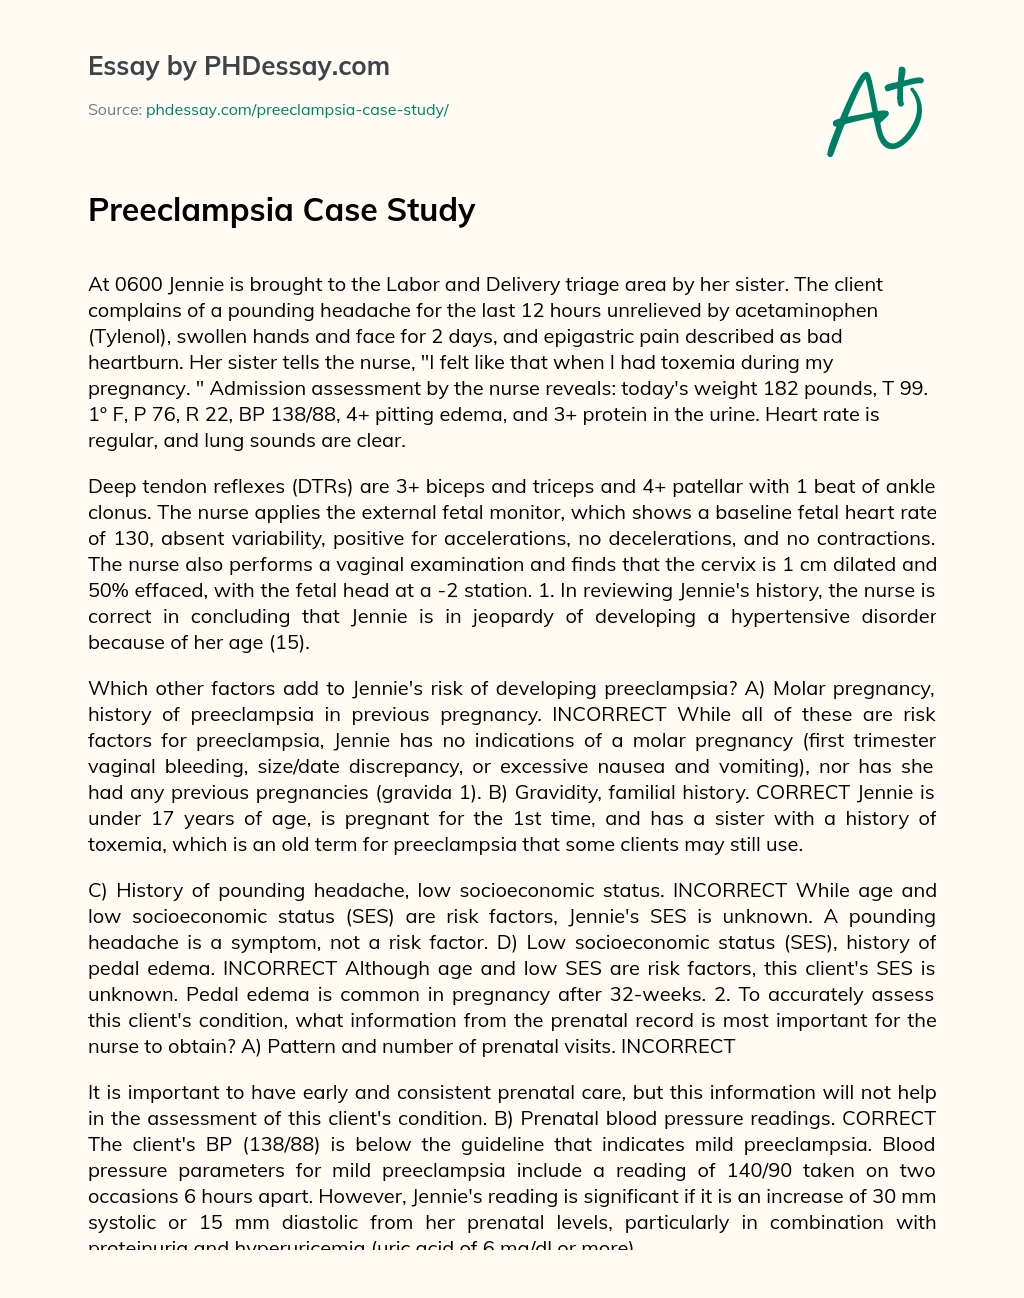 Preeclampsia Case Study essay